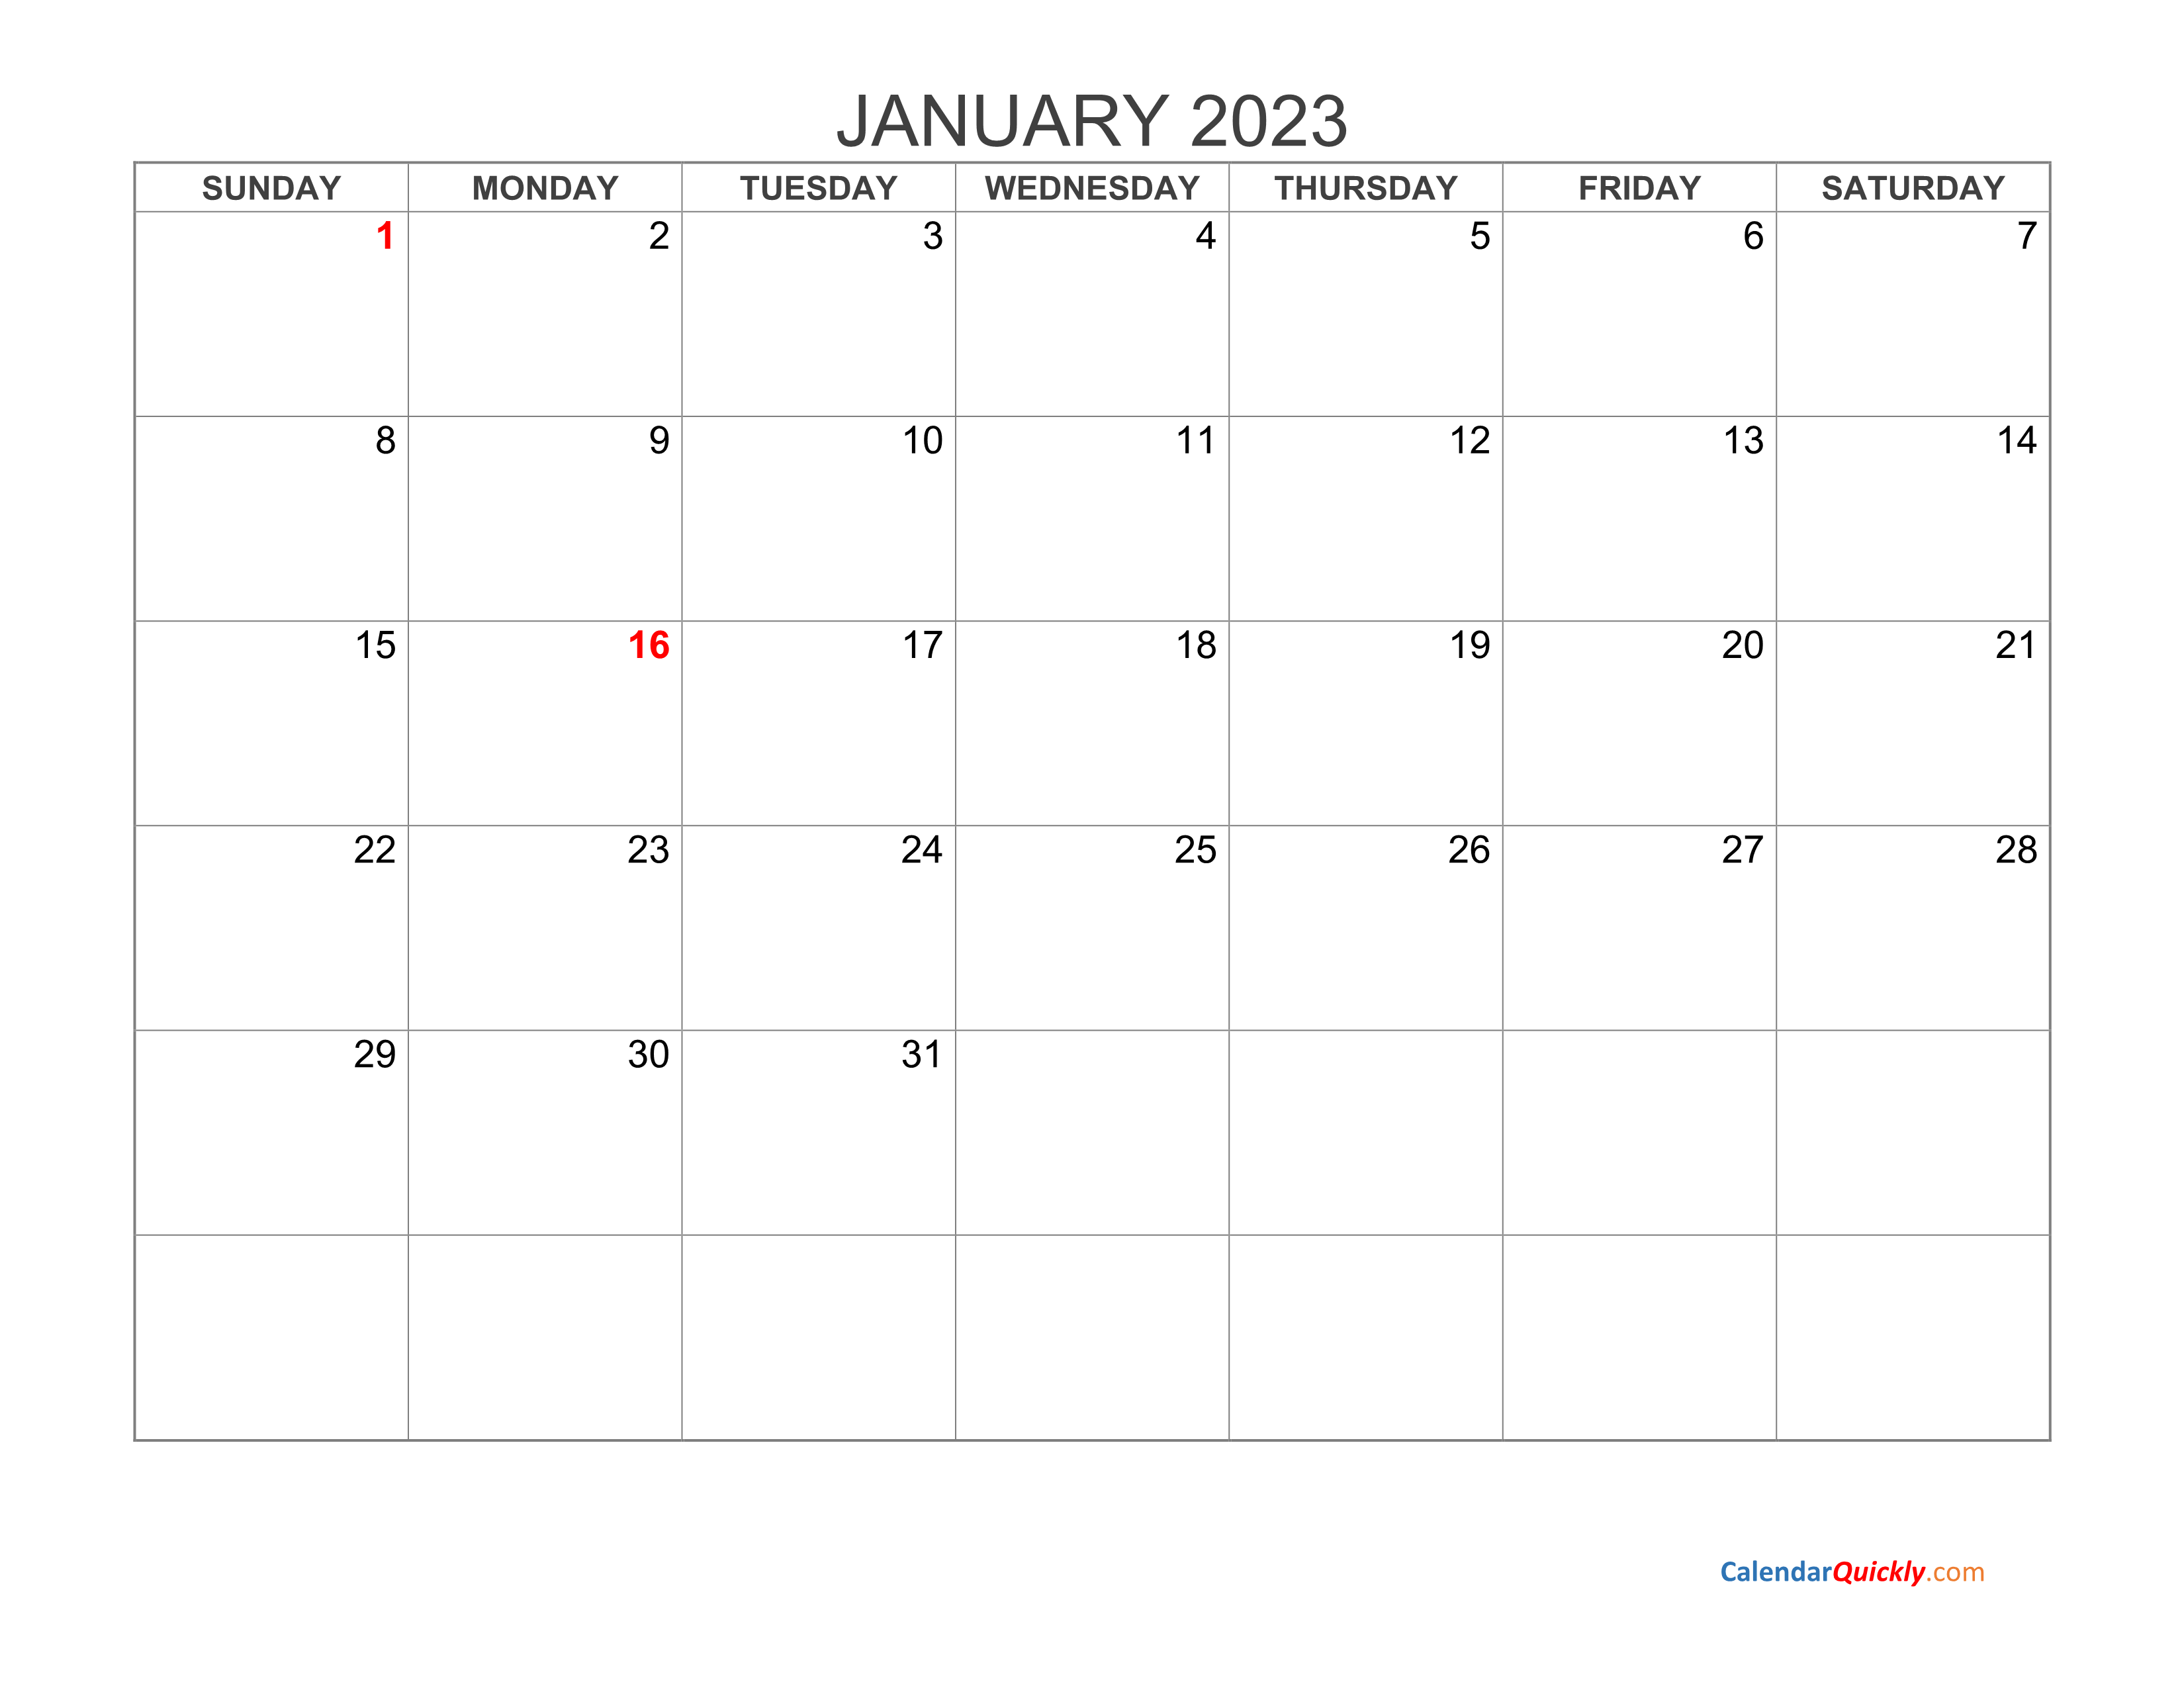 monthly-2023-blank-calendar-calendar-quickly-riset